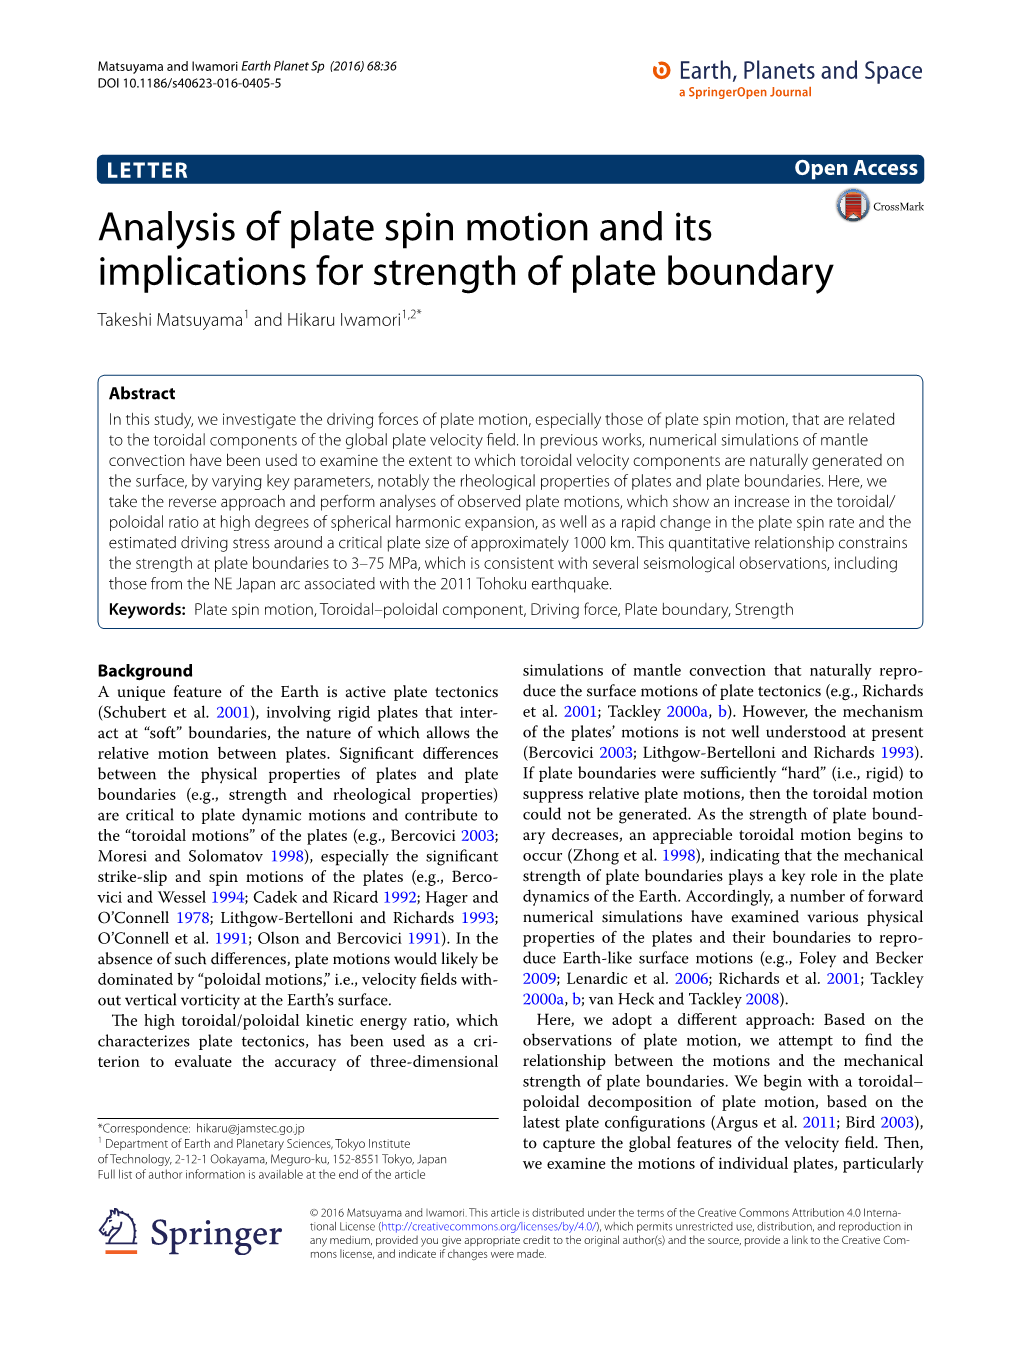 Analysis of Plate Spin Motion and Its Implications for Strength of Plate Boundary Takeshi Matsuyama1 and Hikaru Iwamori1,2*